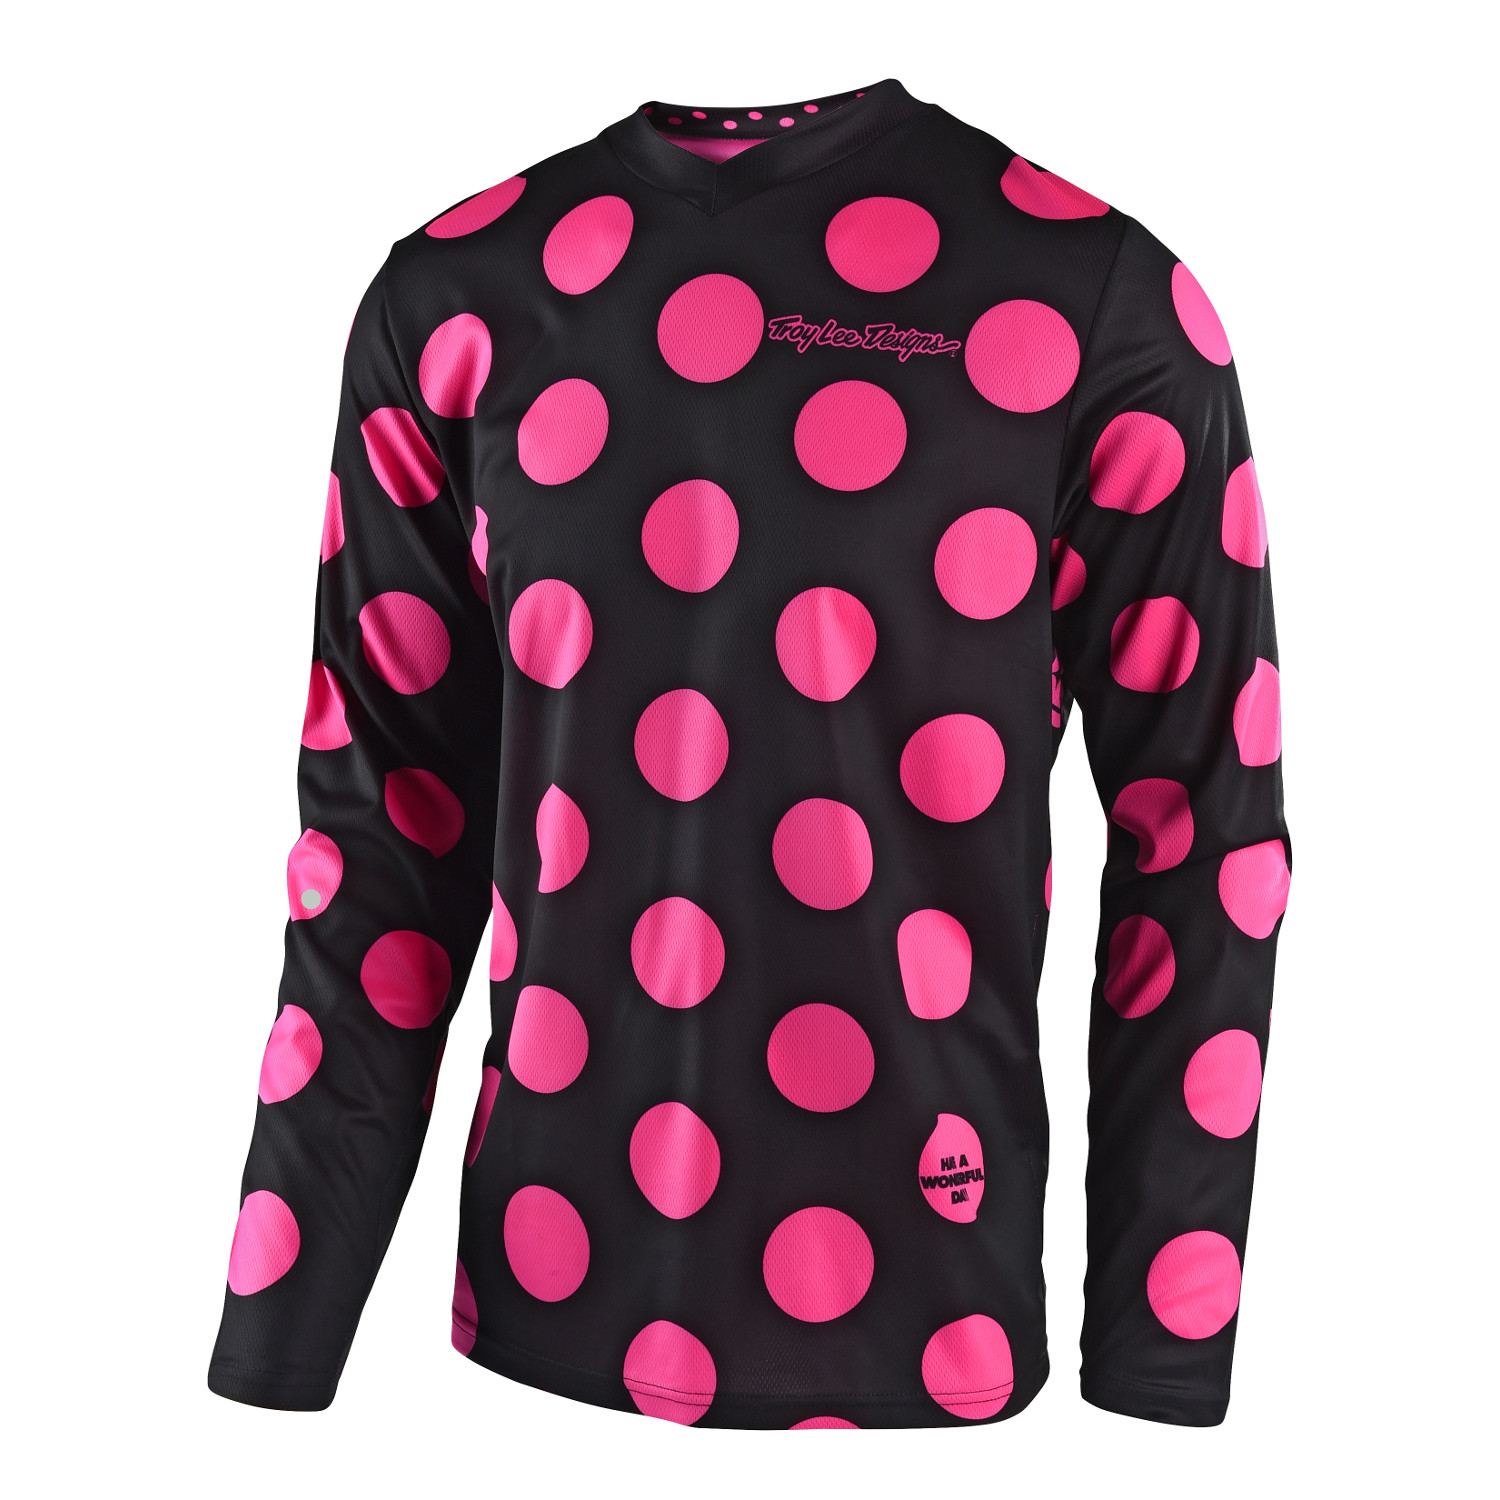 Troy Lee Designs Jersey GP Polka Dot - Black/Flo Pink